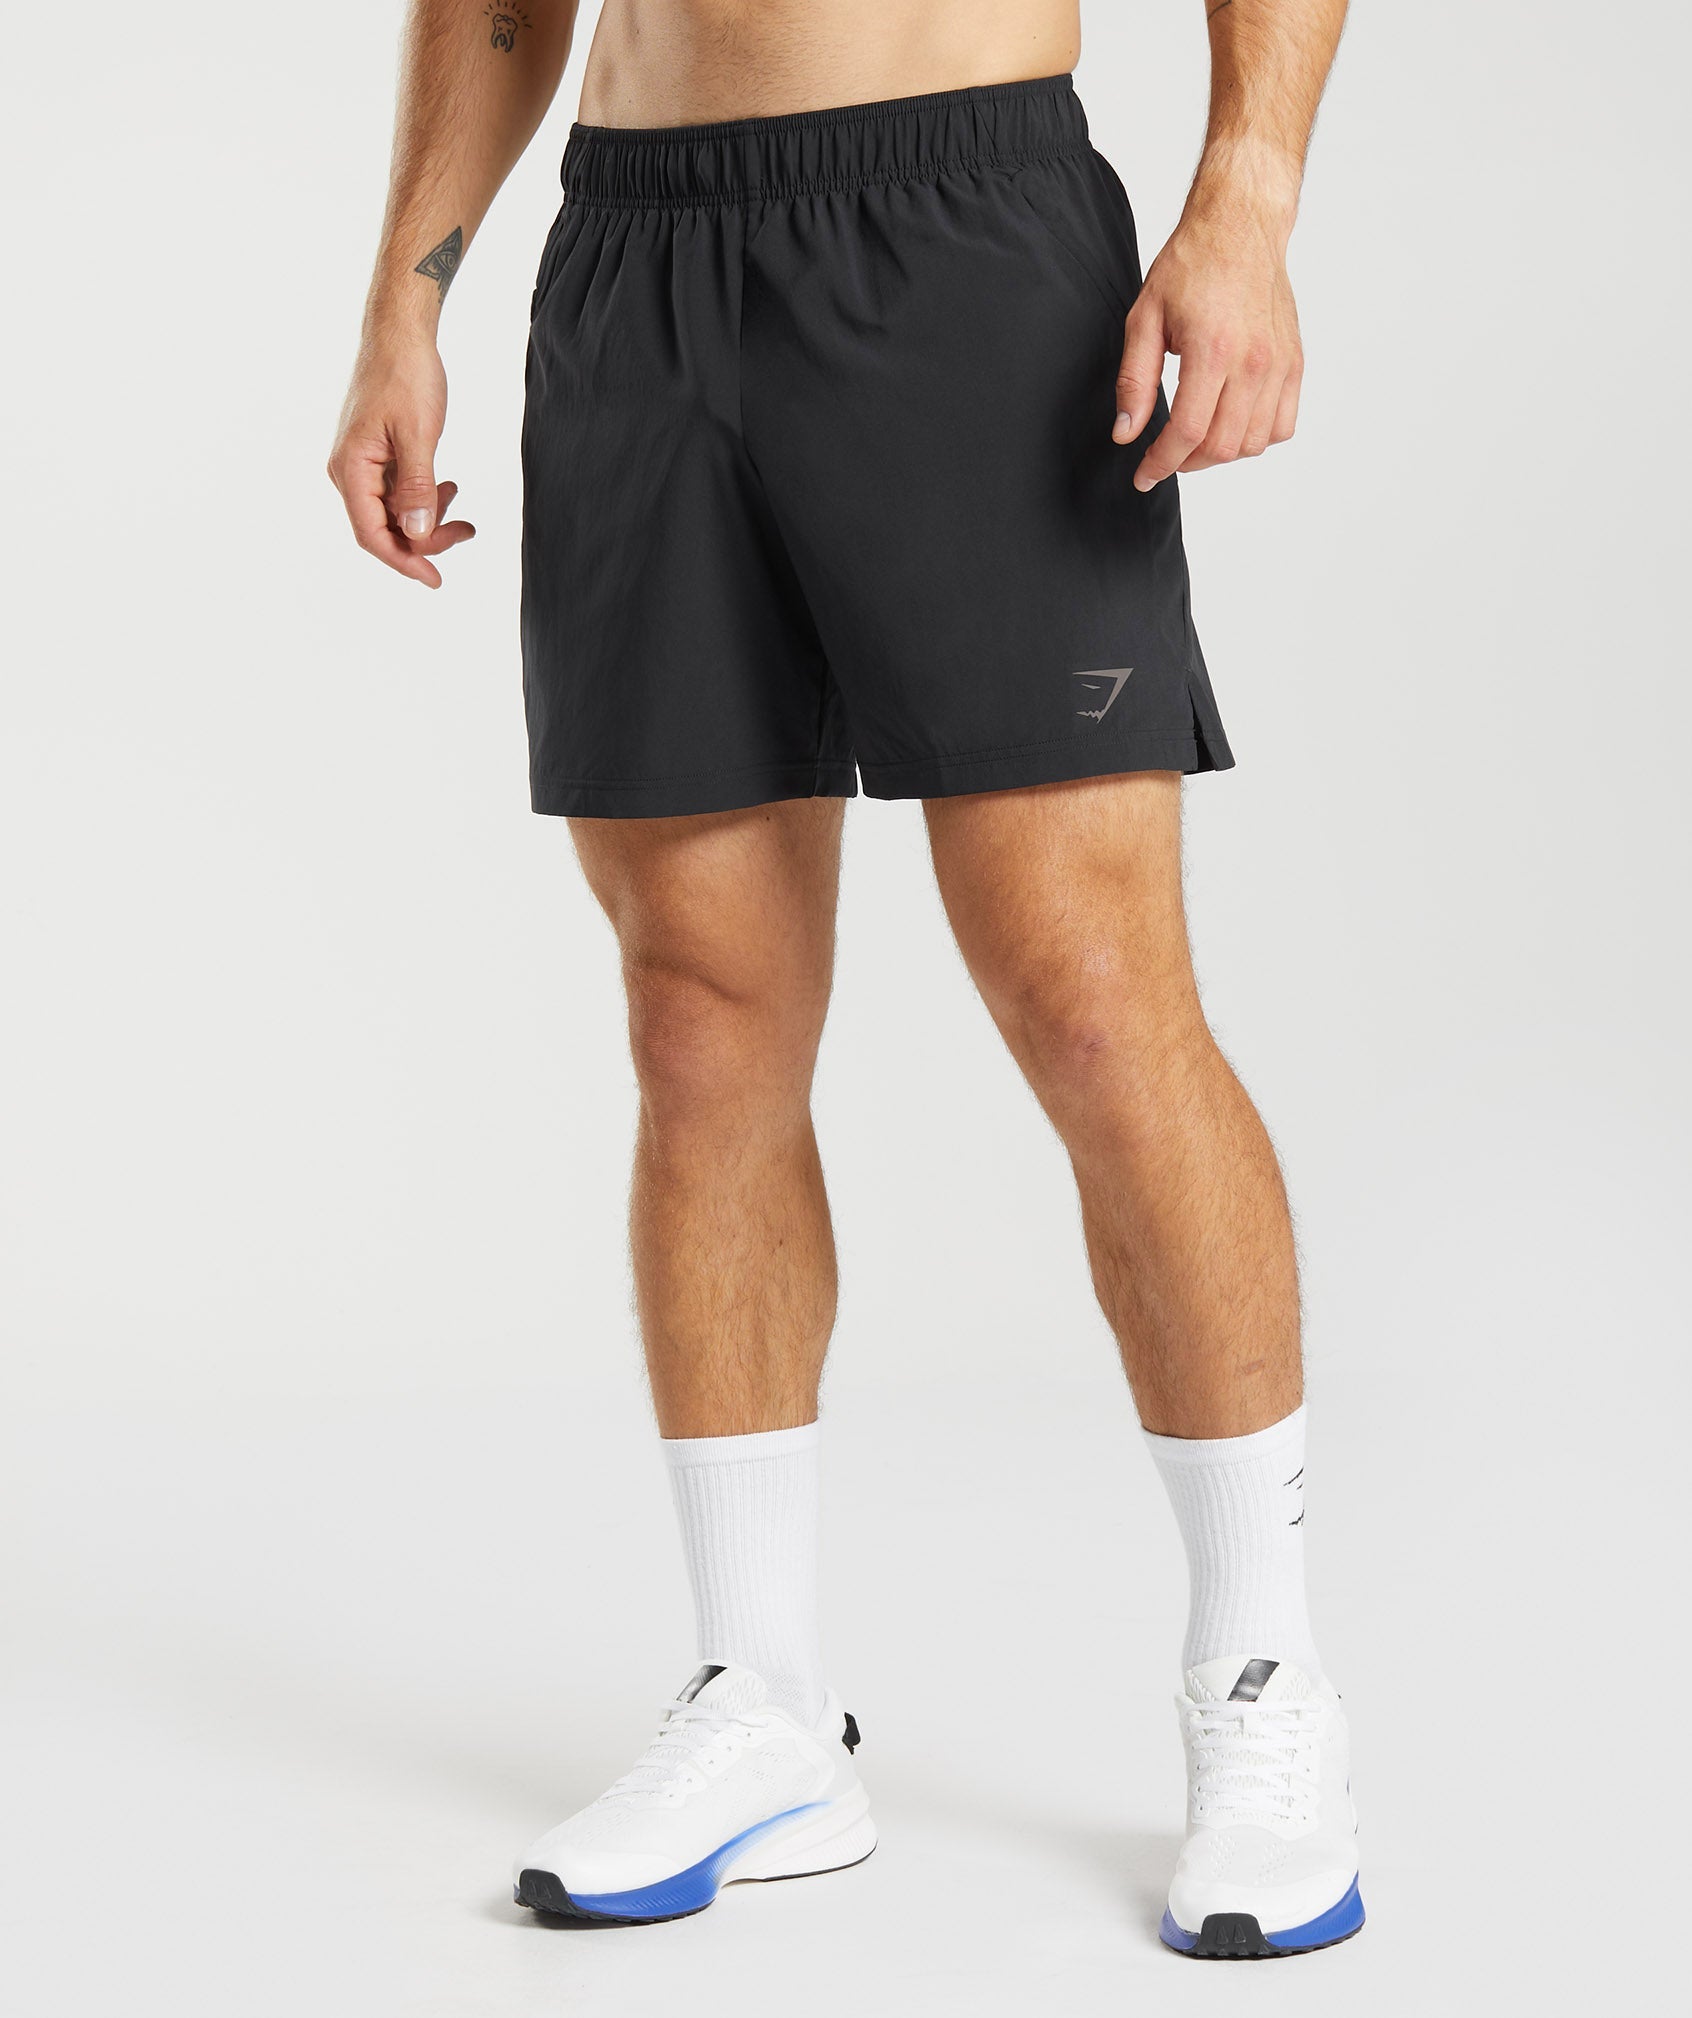 Mens Running Clothes - Running Tops, Bottoms & Shorts